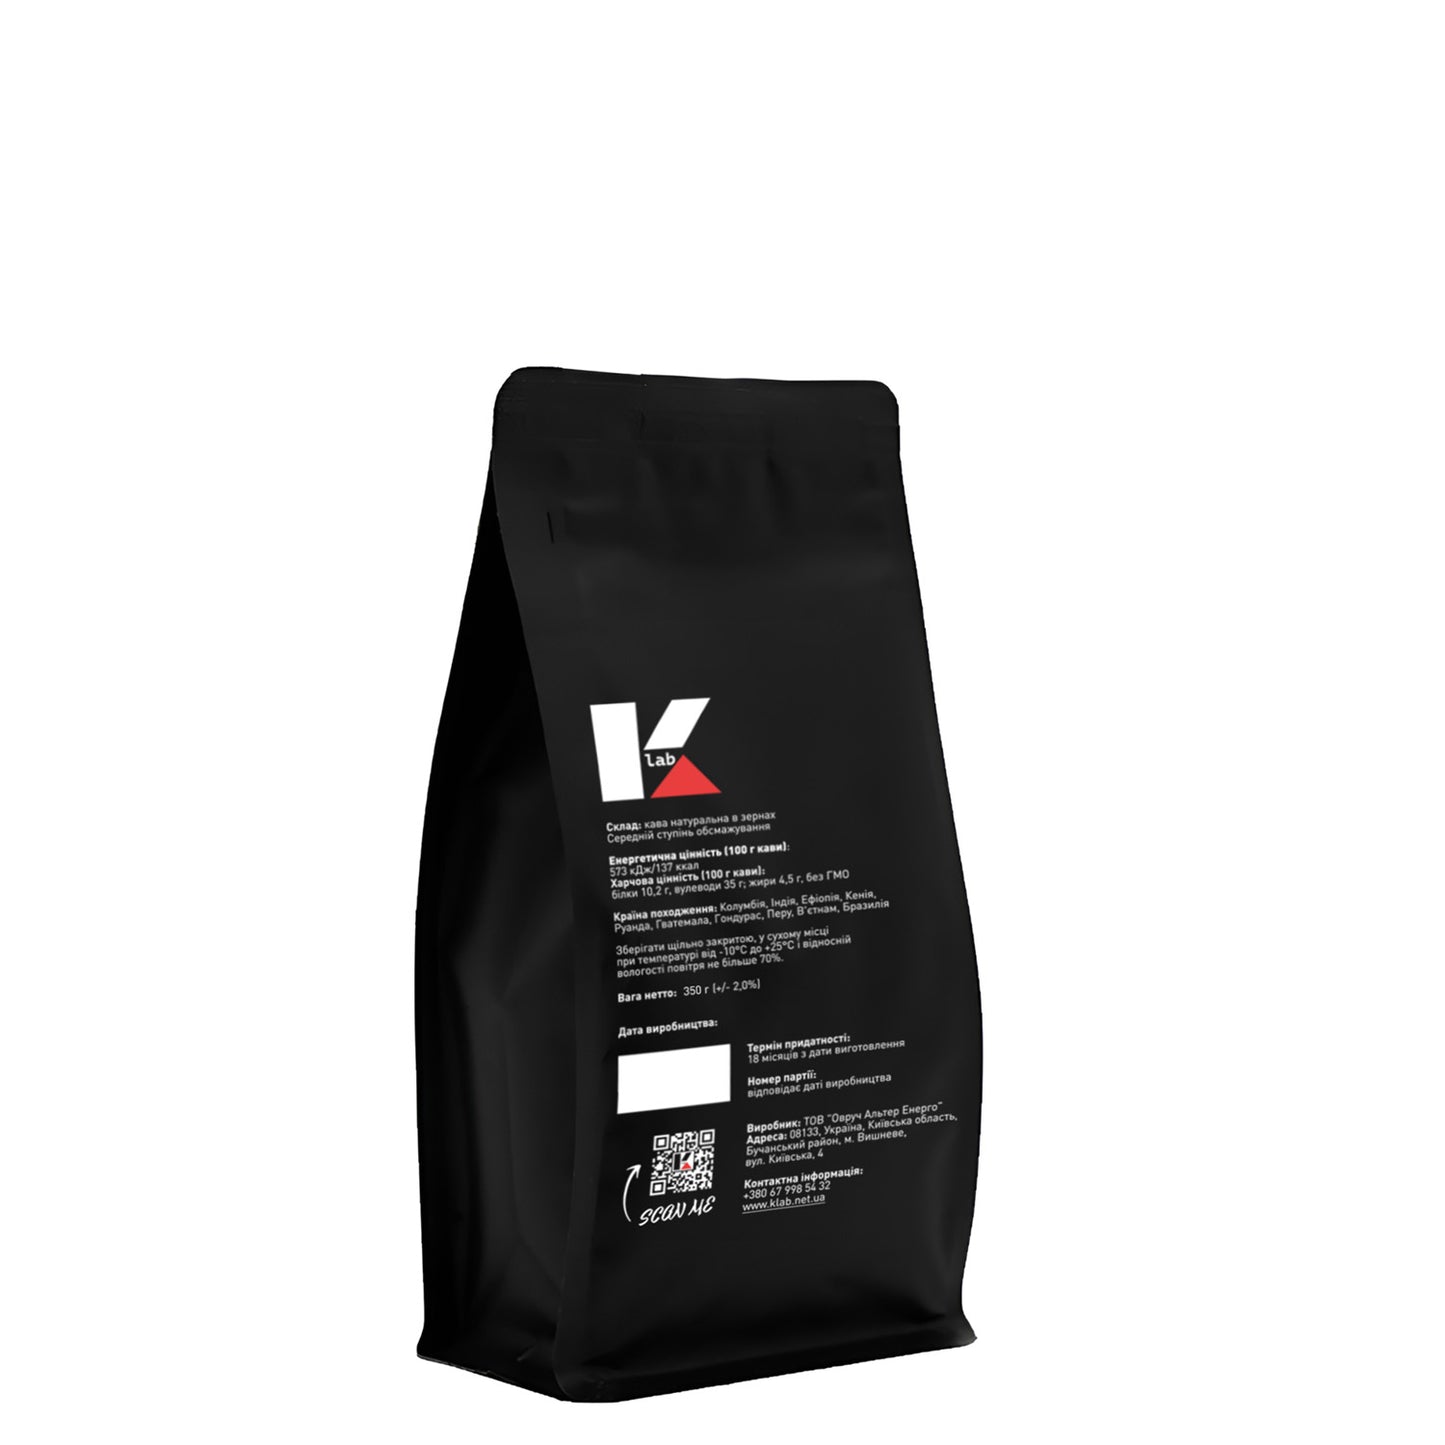 COFFEE STORY №9 - Klab (0.35kg back)